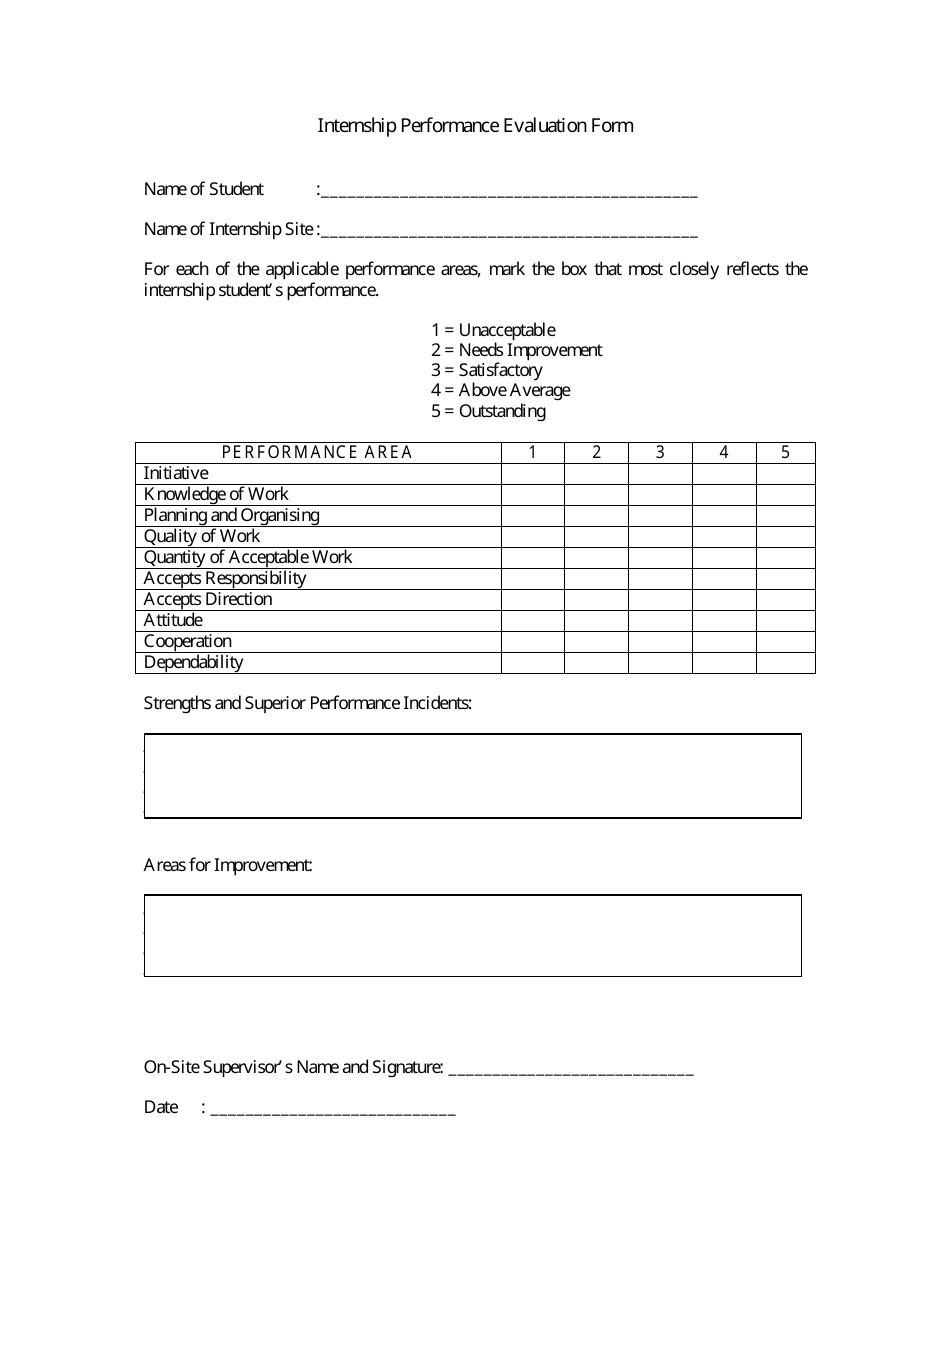 Internship Performance Evaluation Form, Page 1